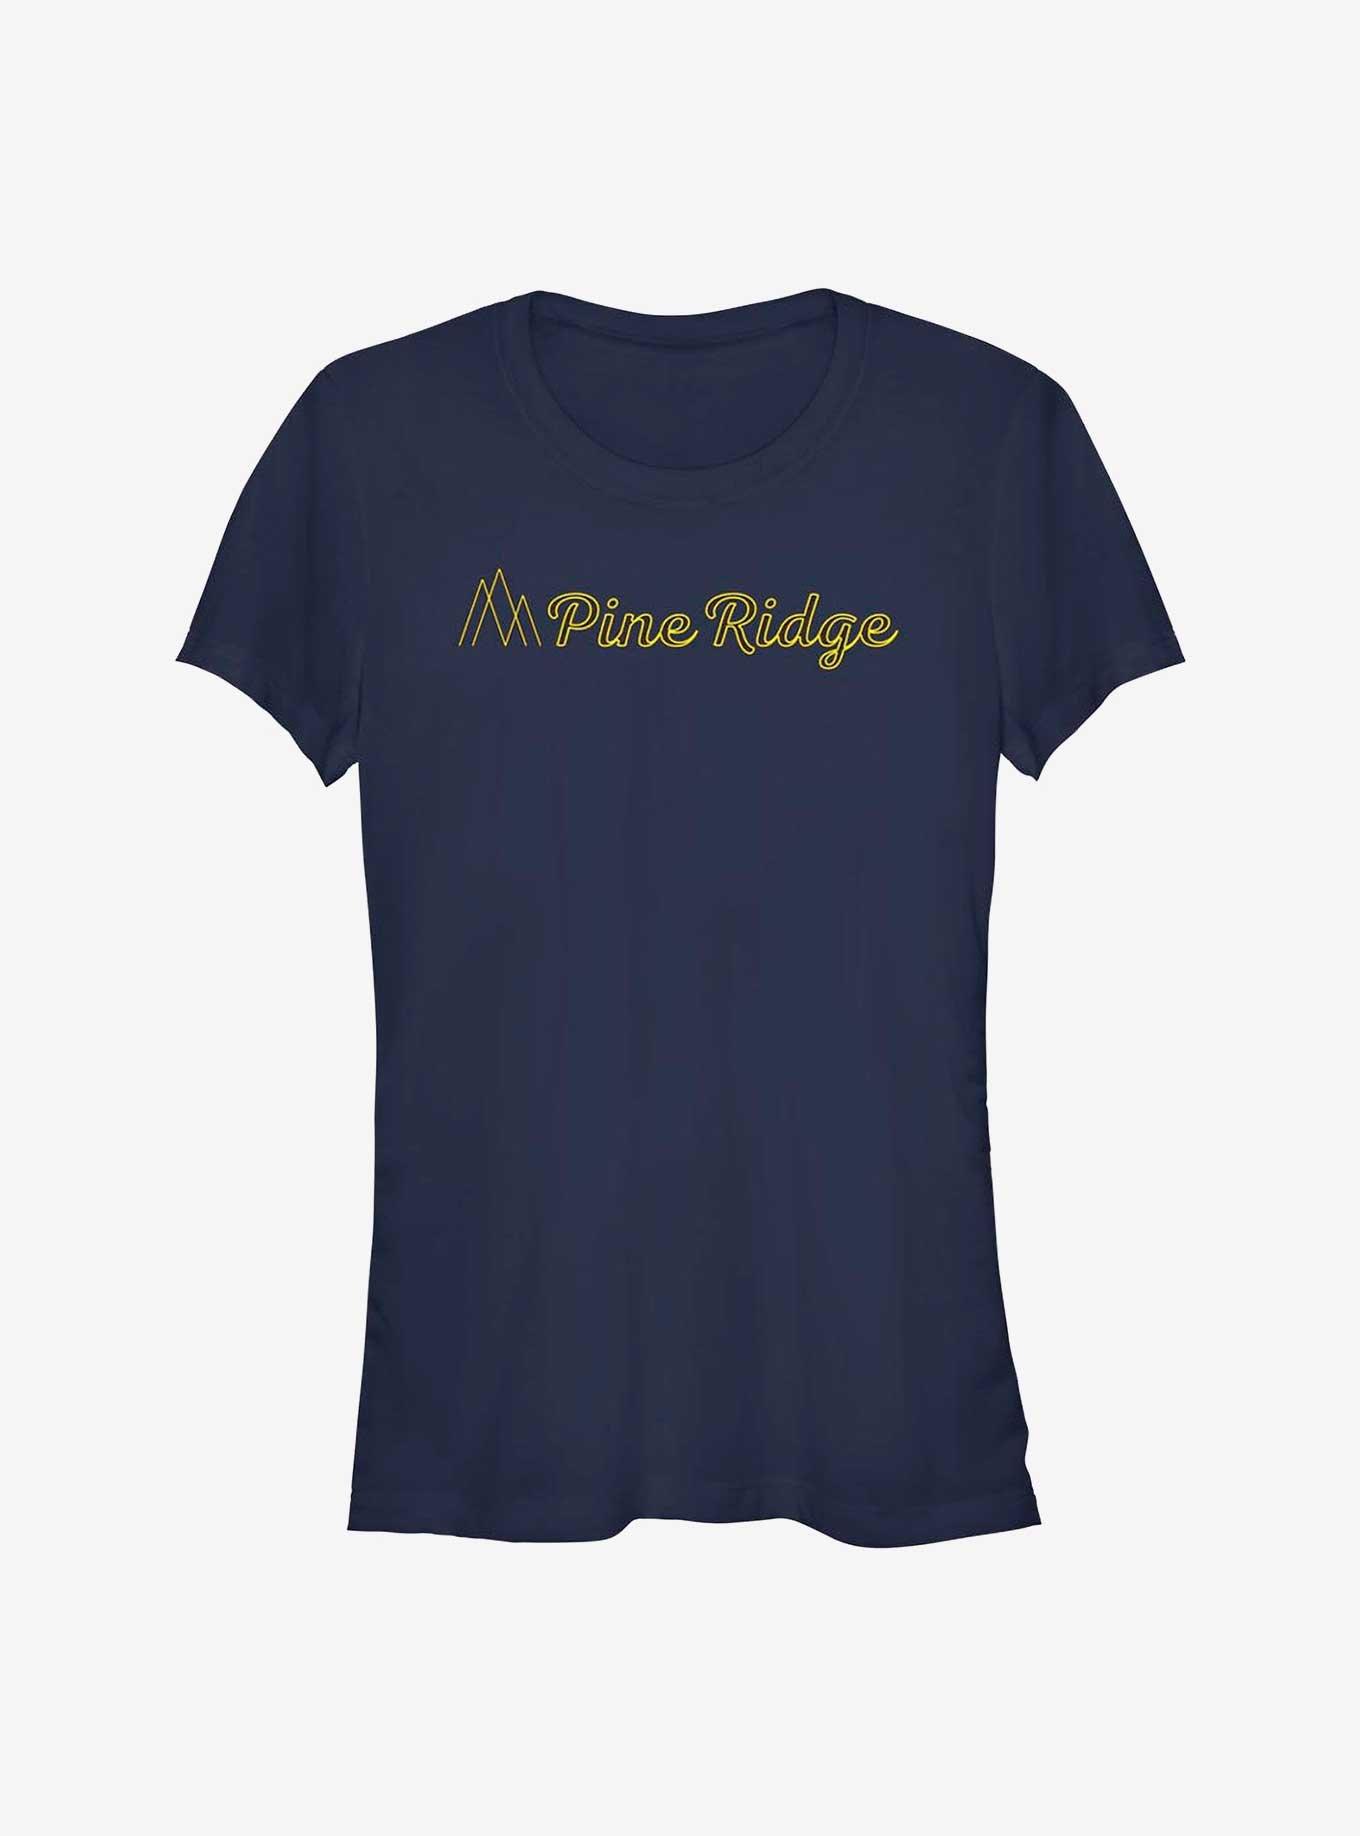 The Adam Project Pine Ridge Logo Girls T-Shirt